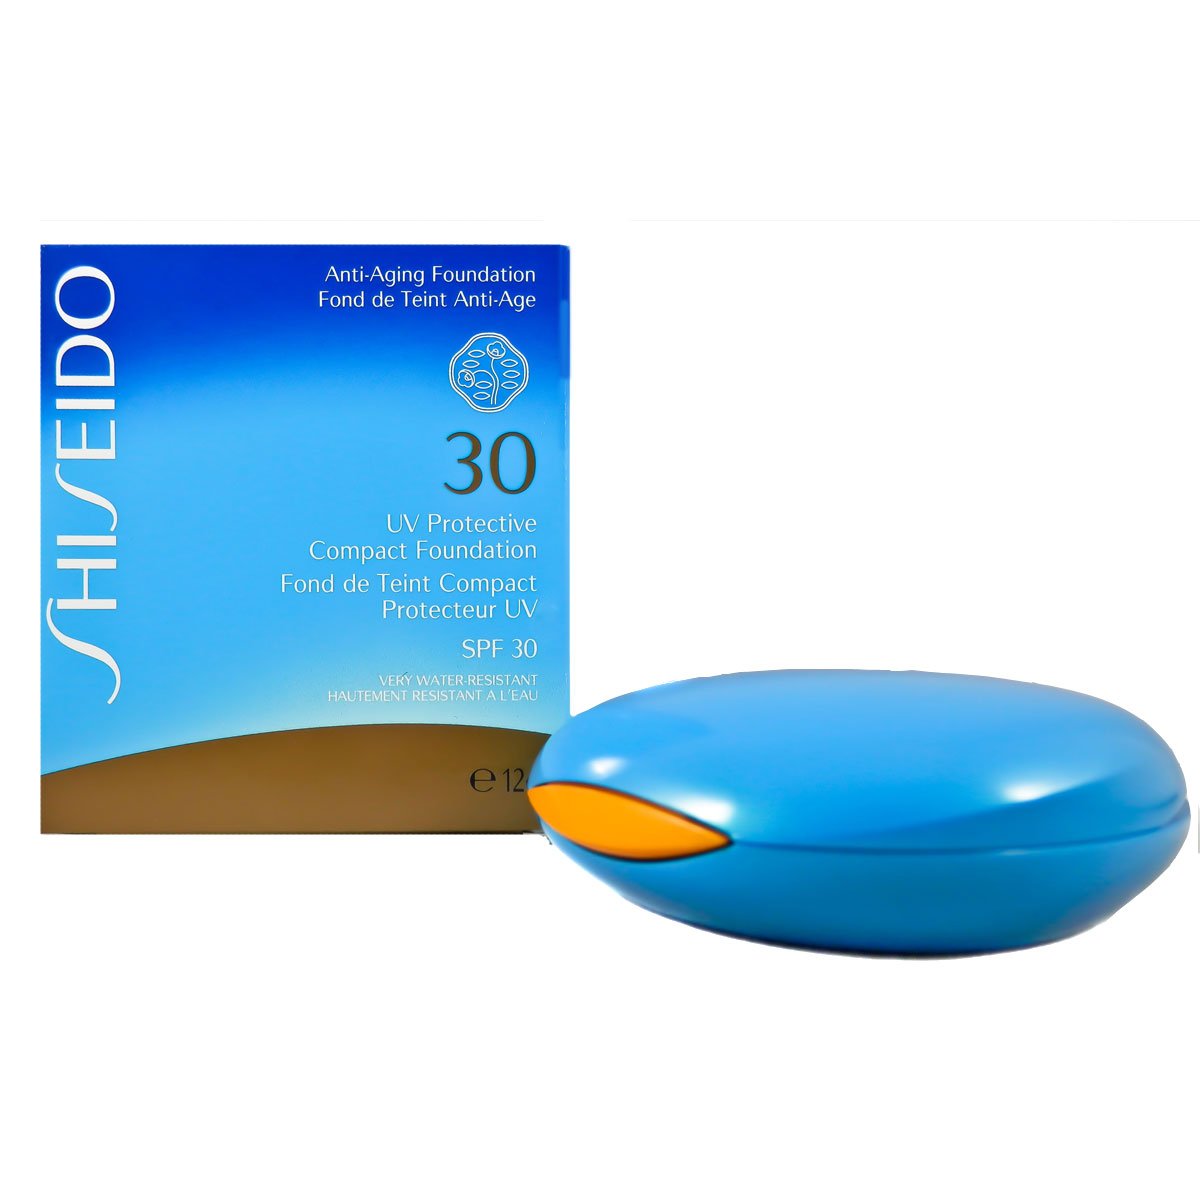 Shiseido UV Protective Compact Foundation Light Ivory Pack of 1 x 12 g